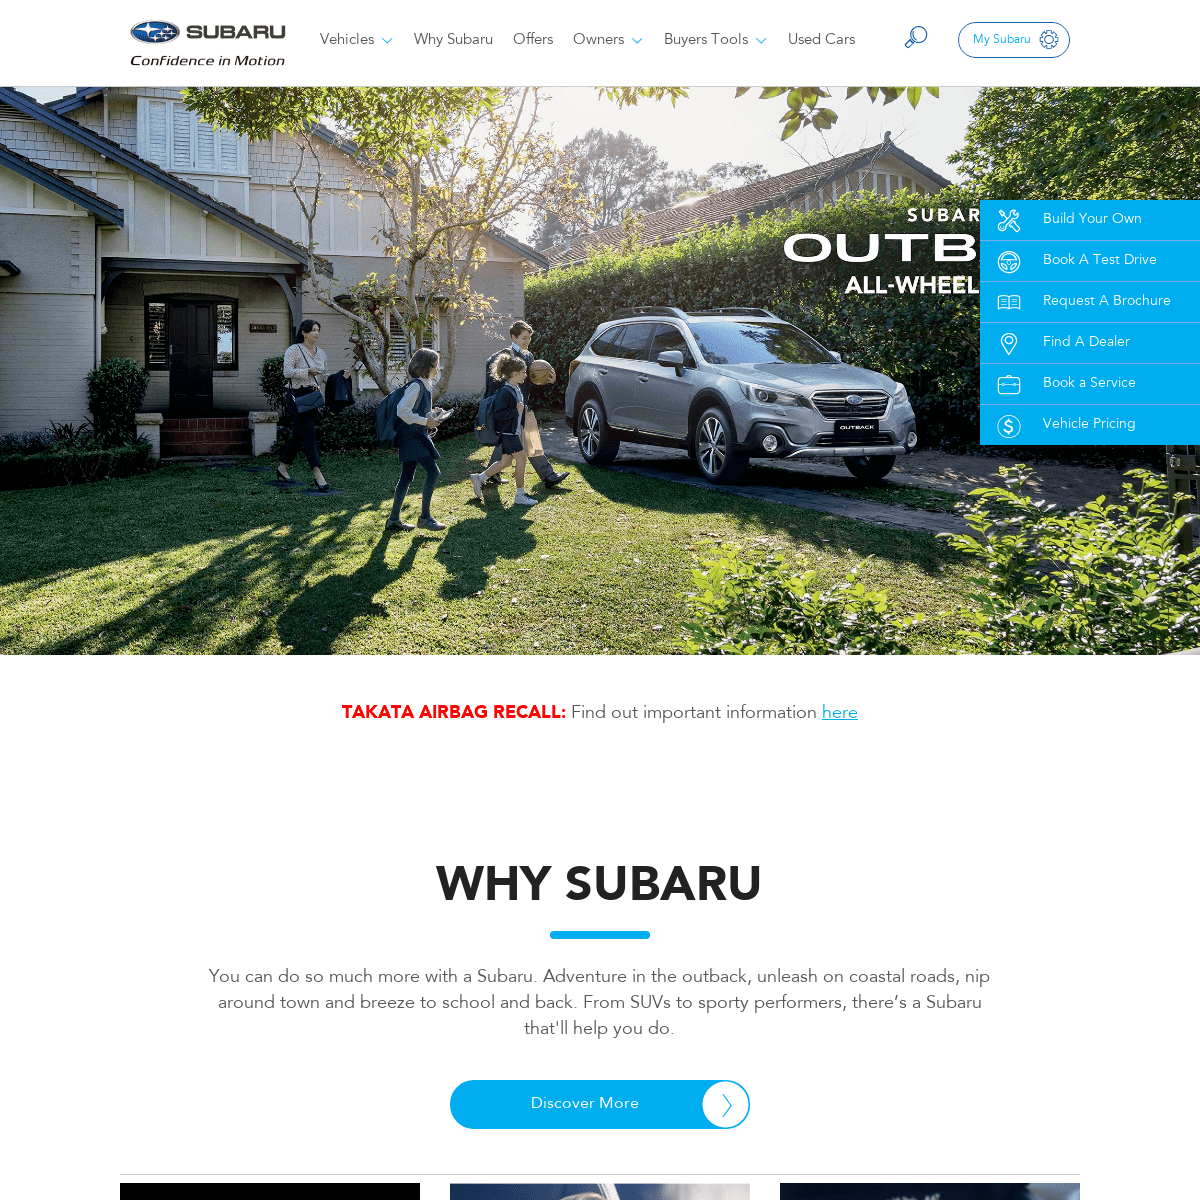 A complete backup of subaru.com.au